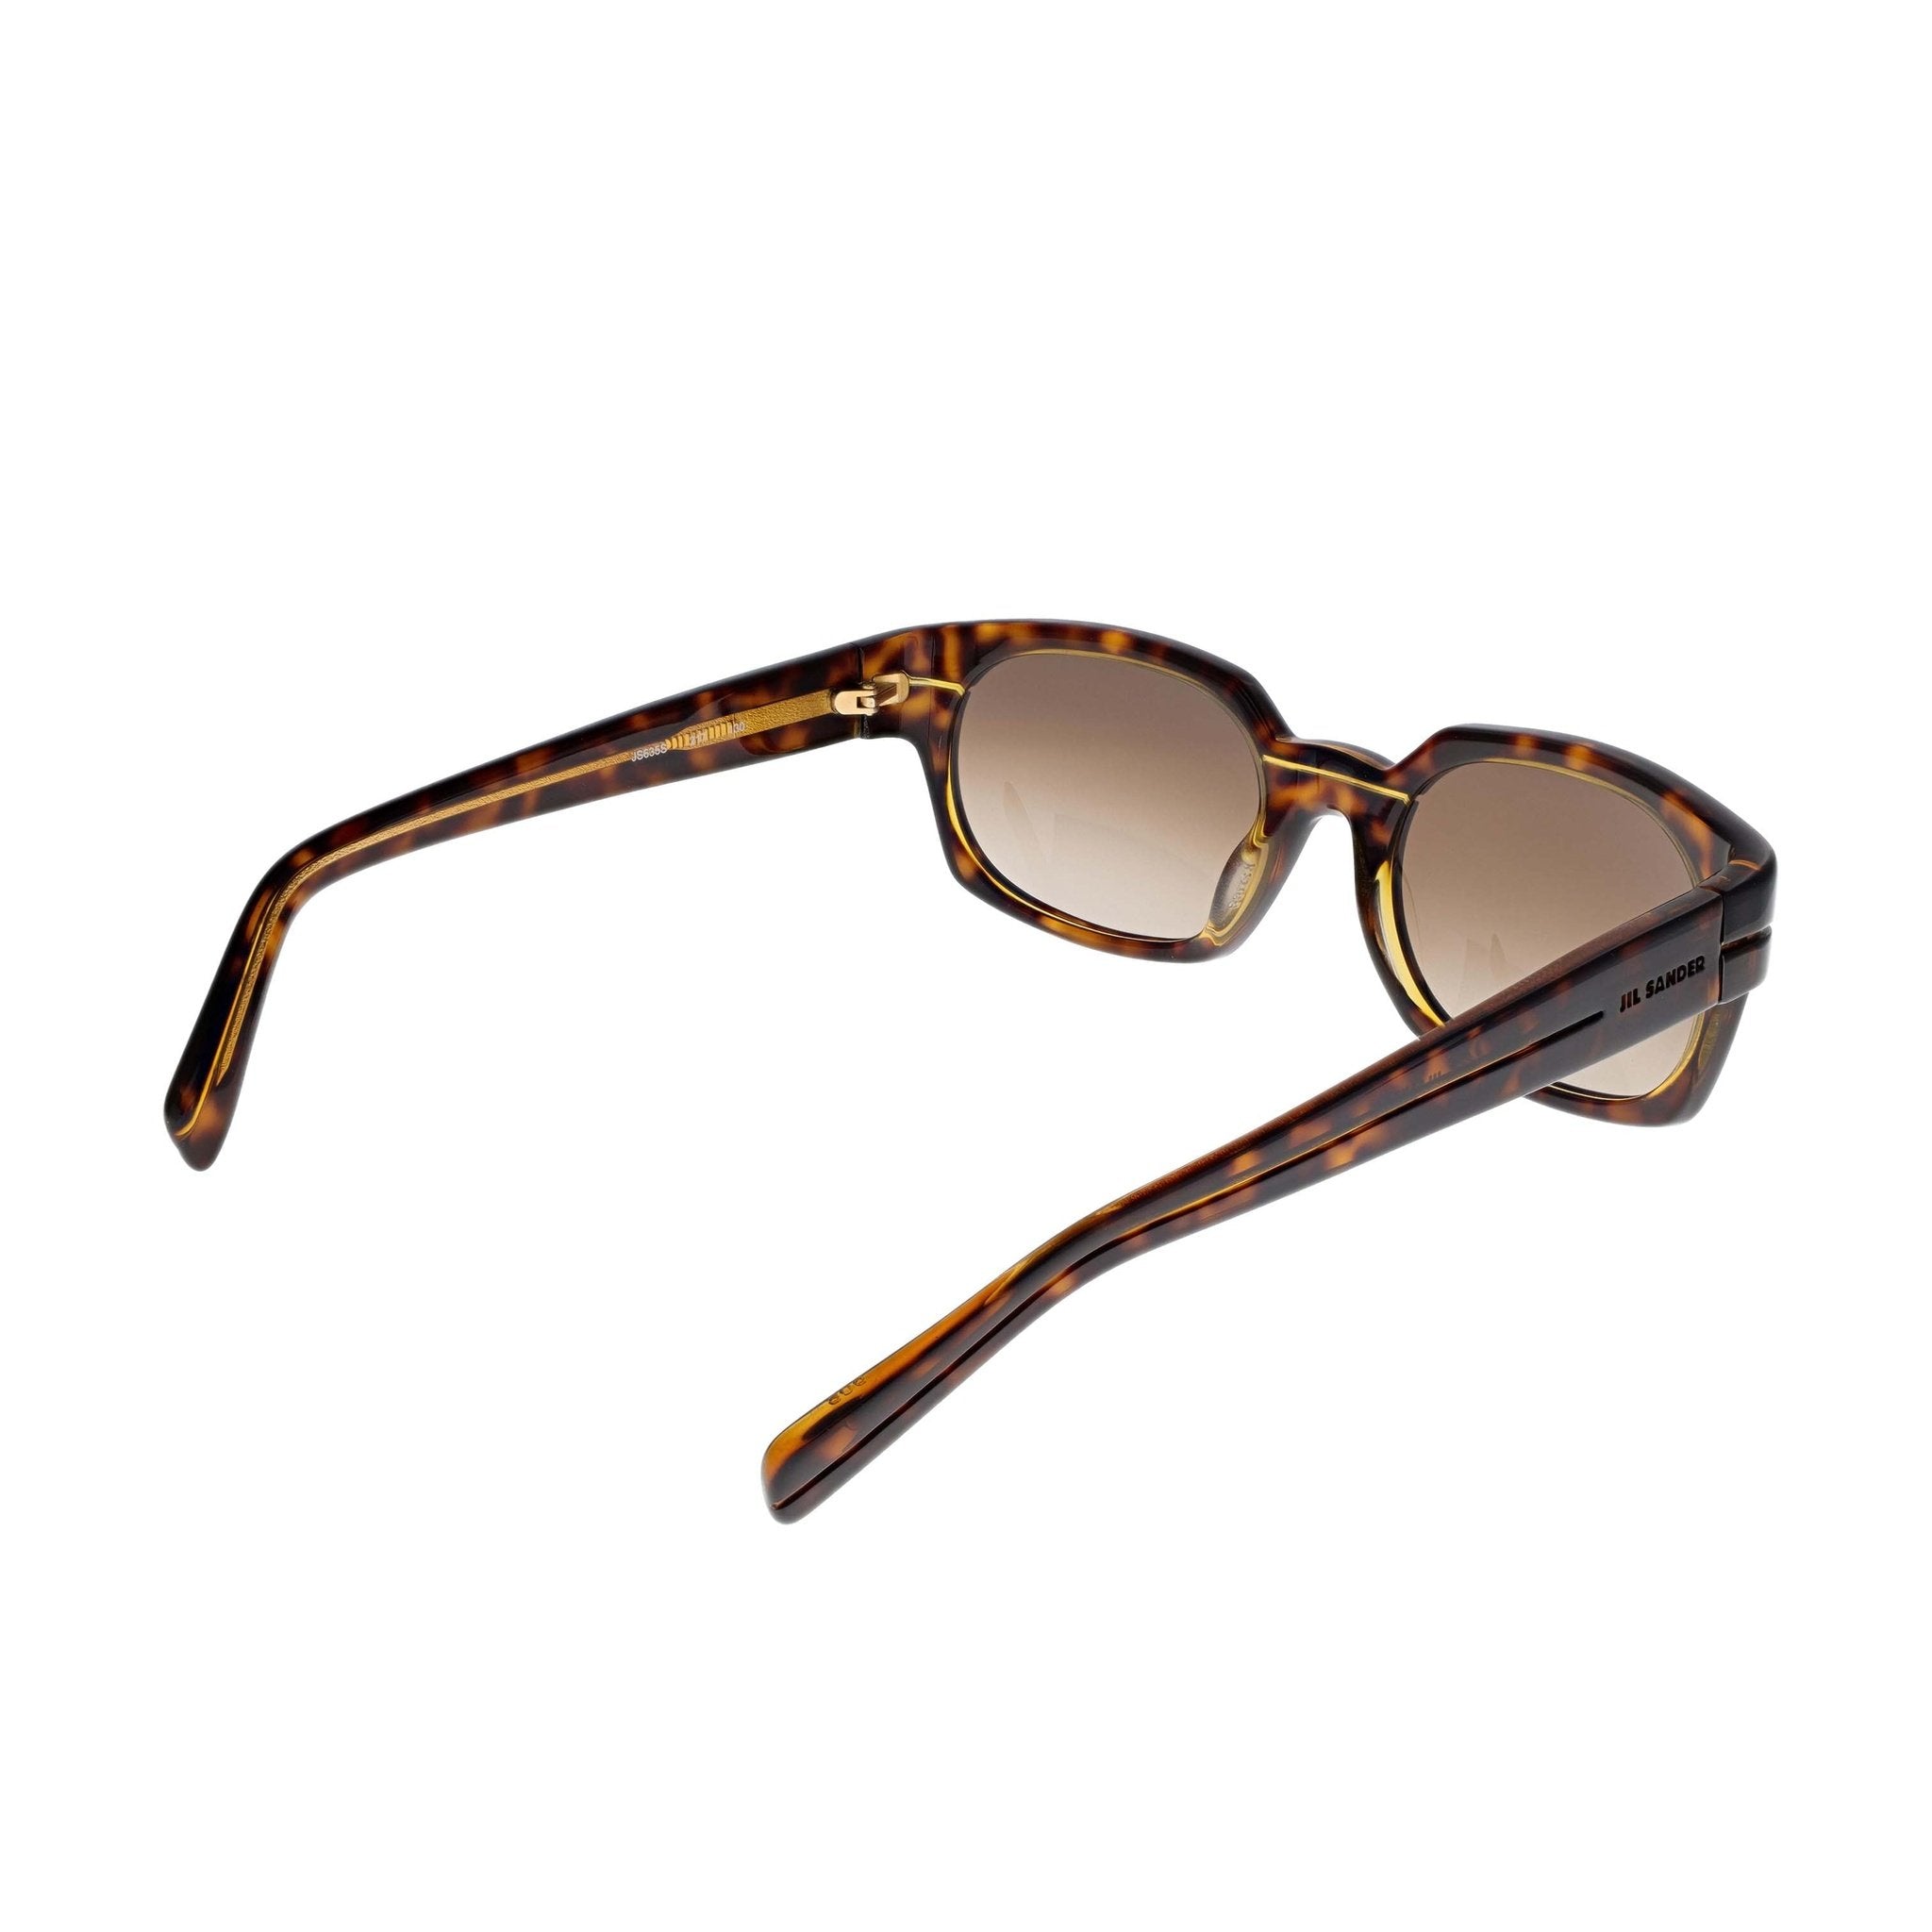 Jil Sander Sunglasses - JS635S - Tortoise